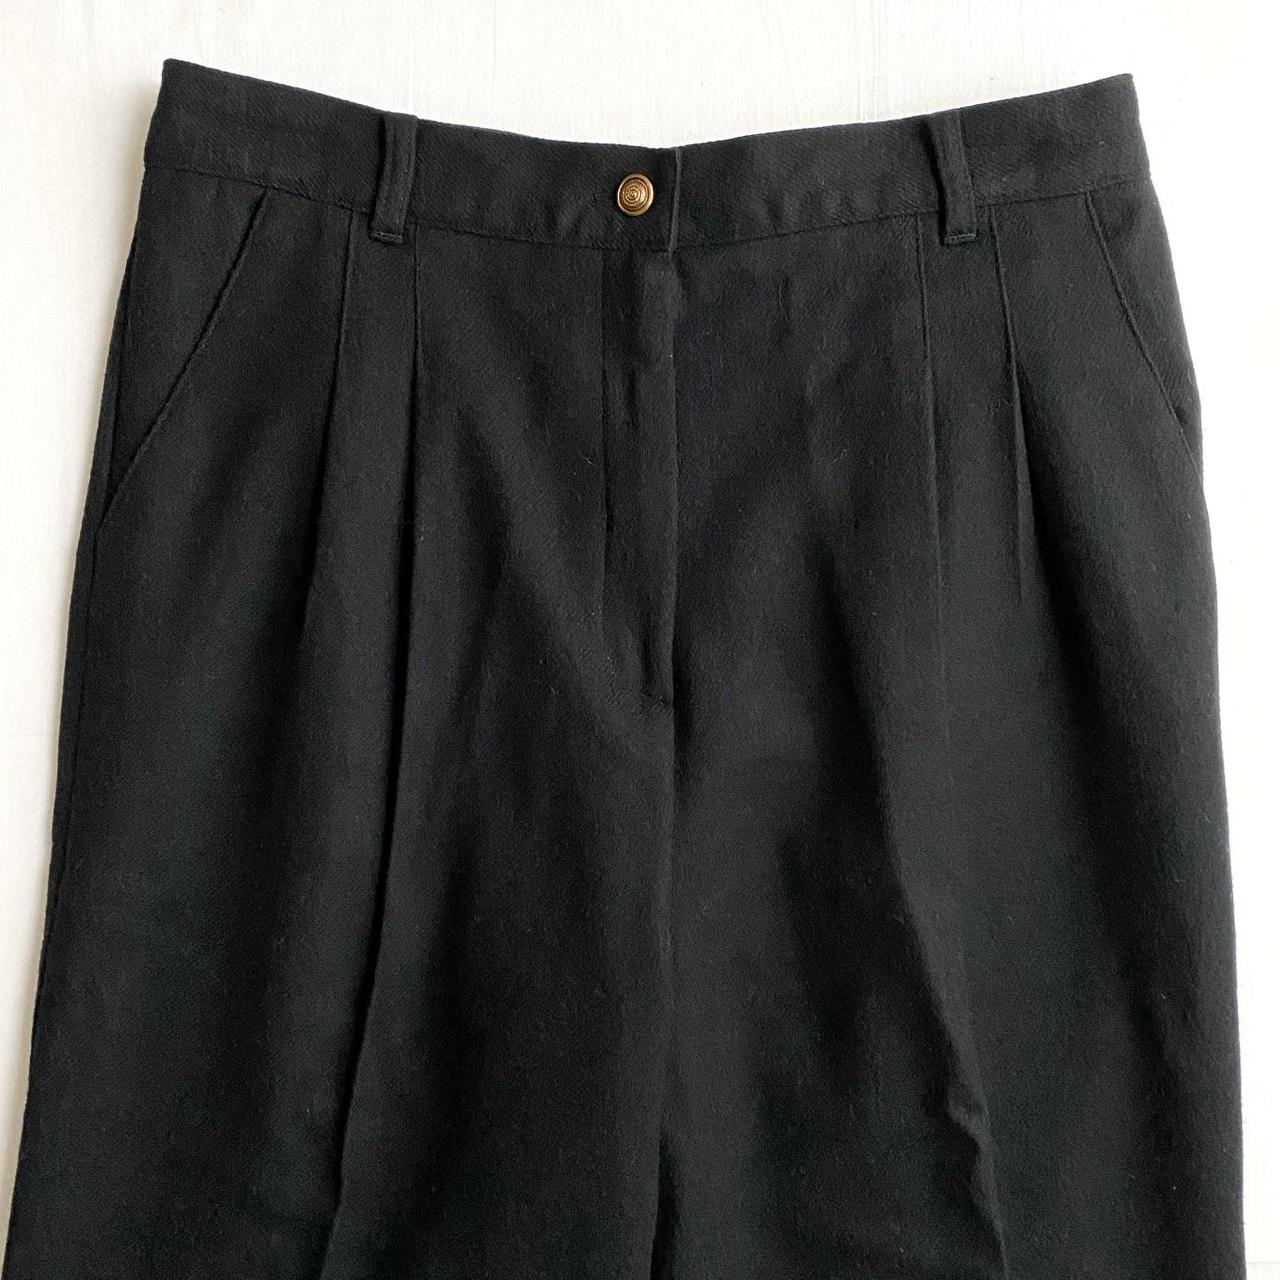 Sag Harbor Women's Black Trousers (4)